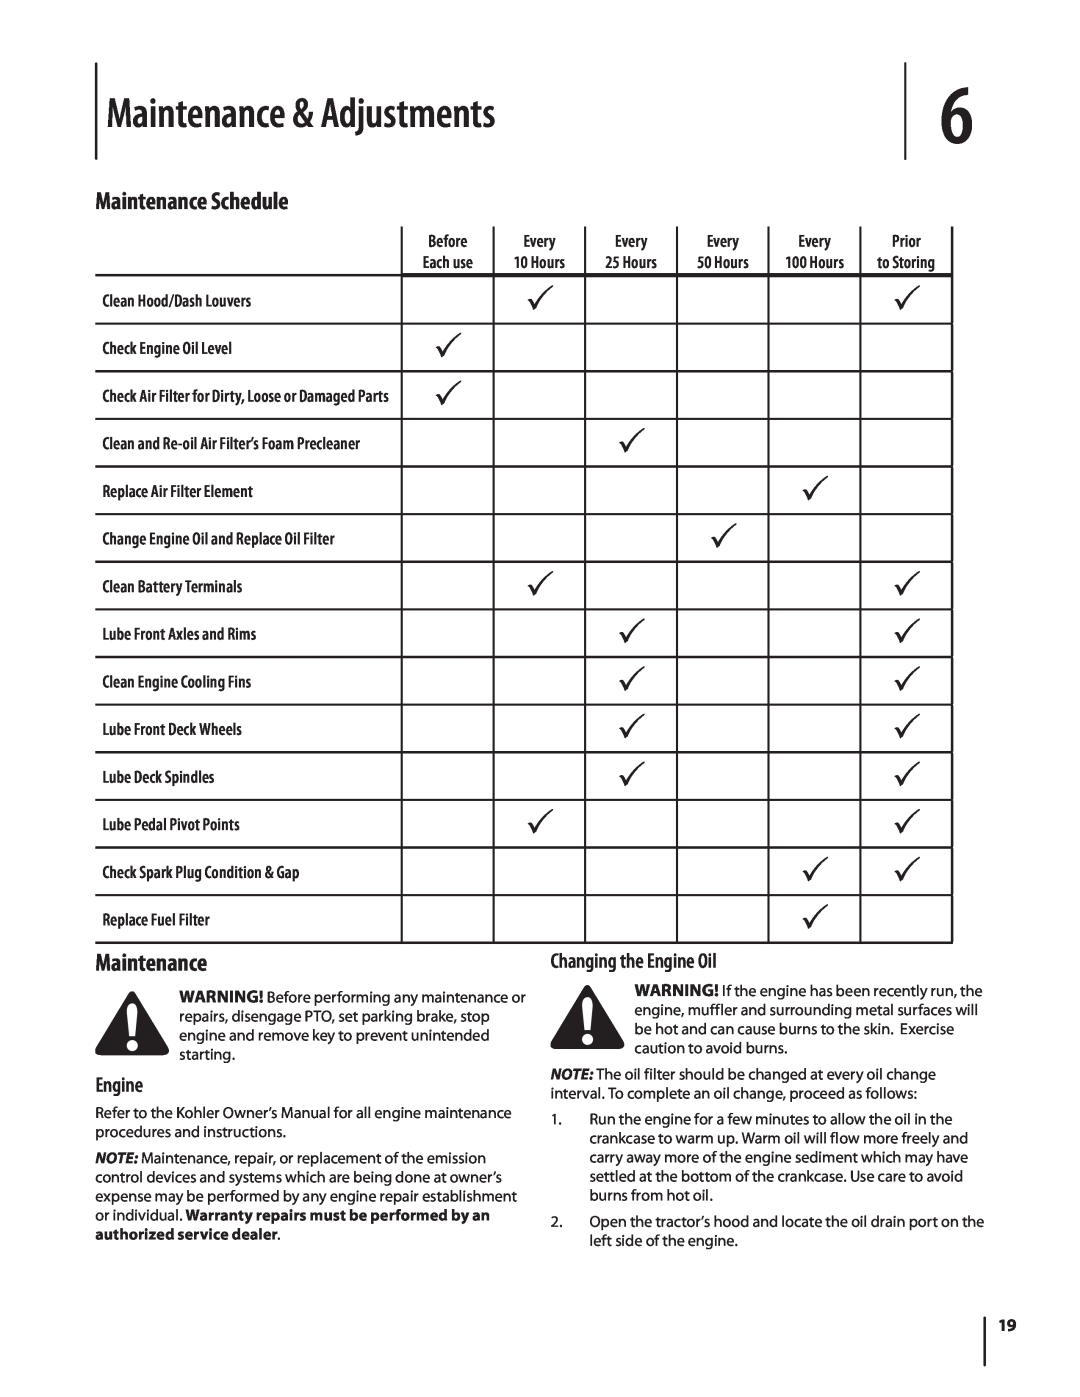 MTD 1742 warranty Maintenance & Adjustments, Maintenance Schedule 